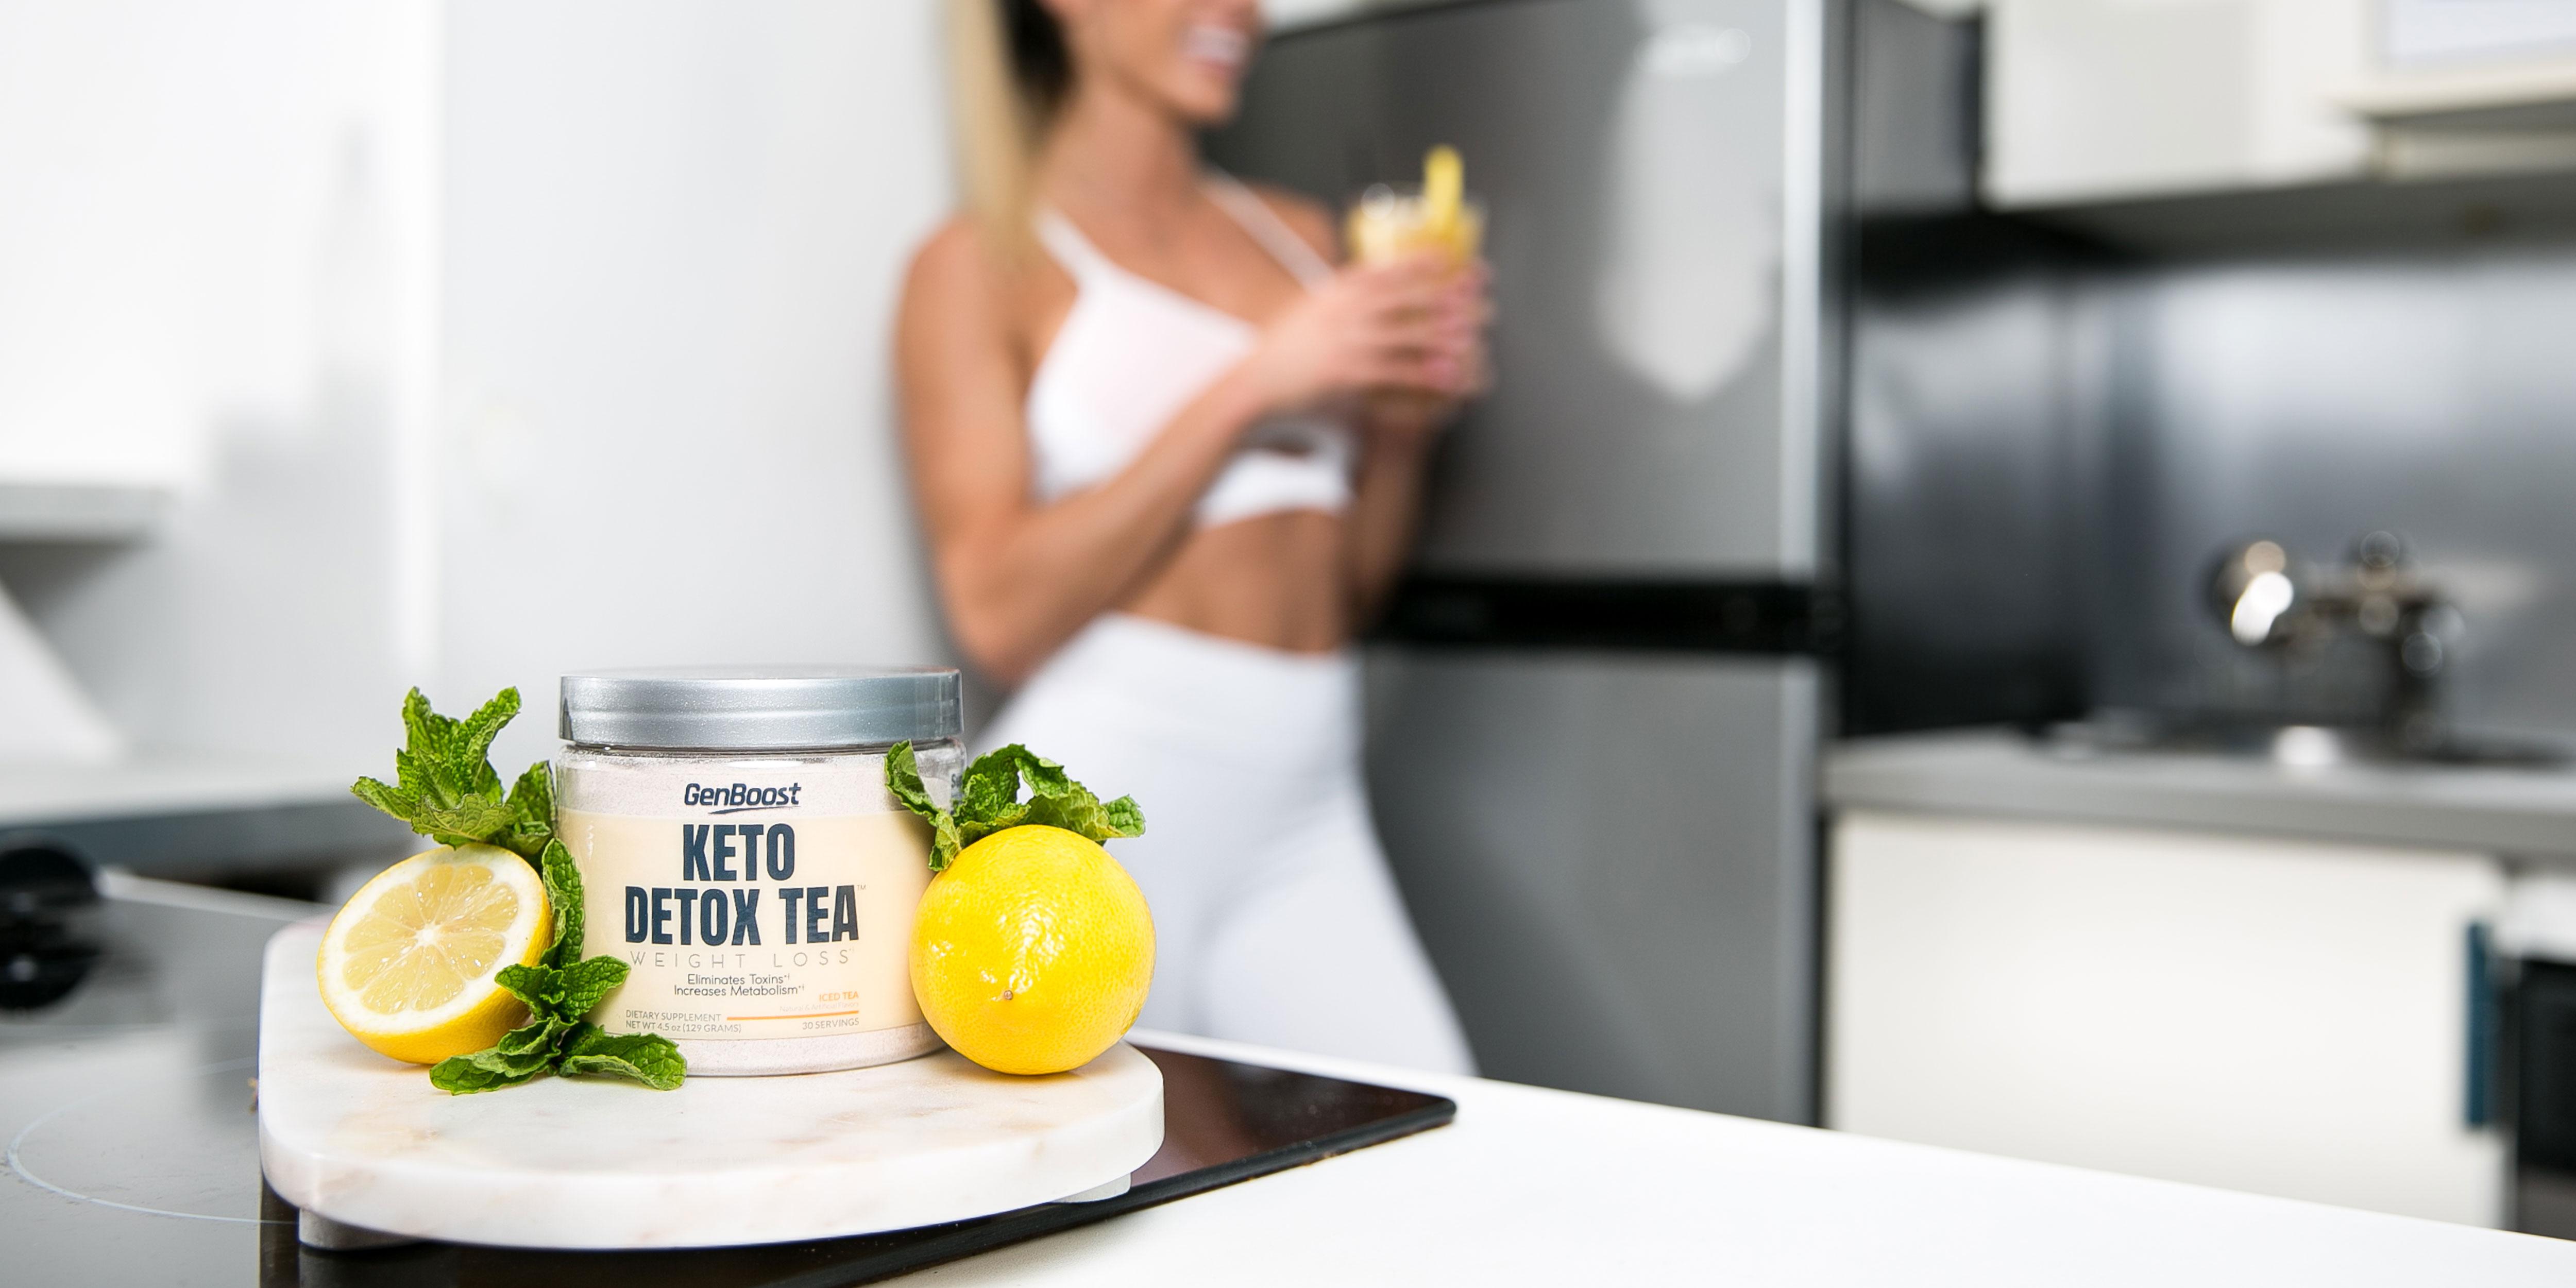 Genboost keto detox tea new year